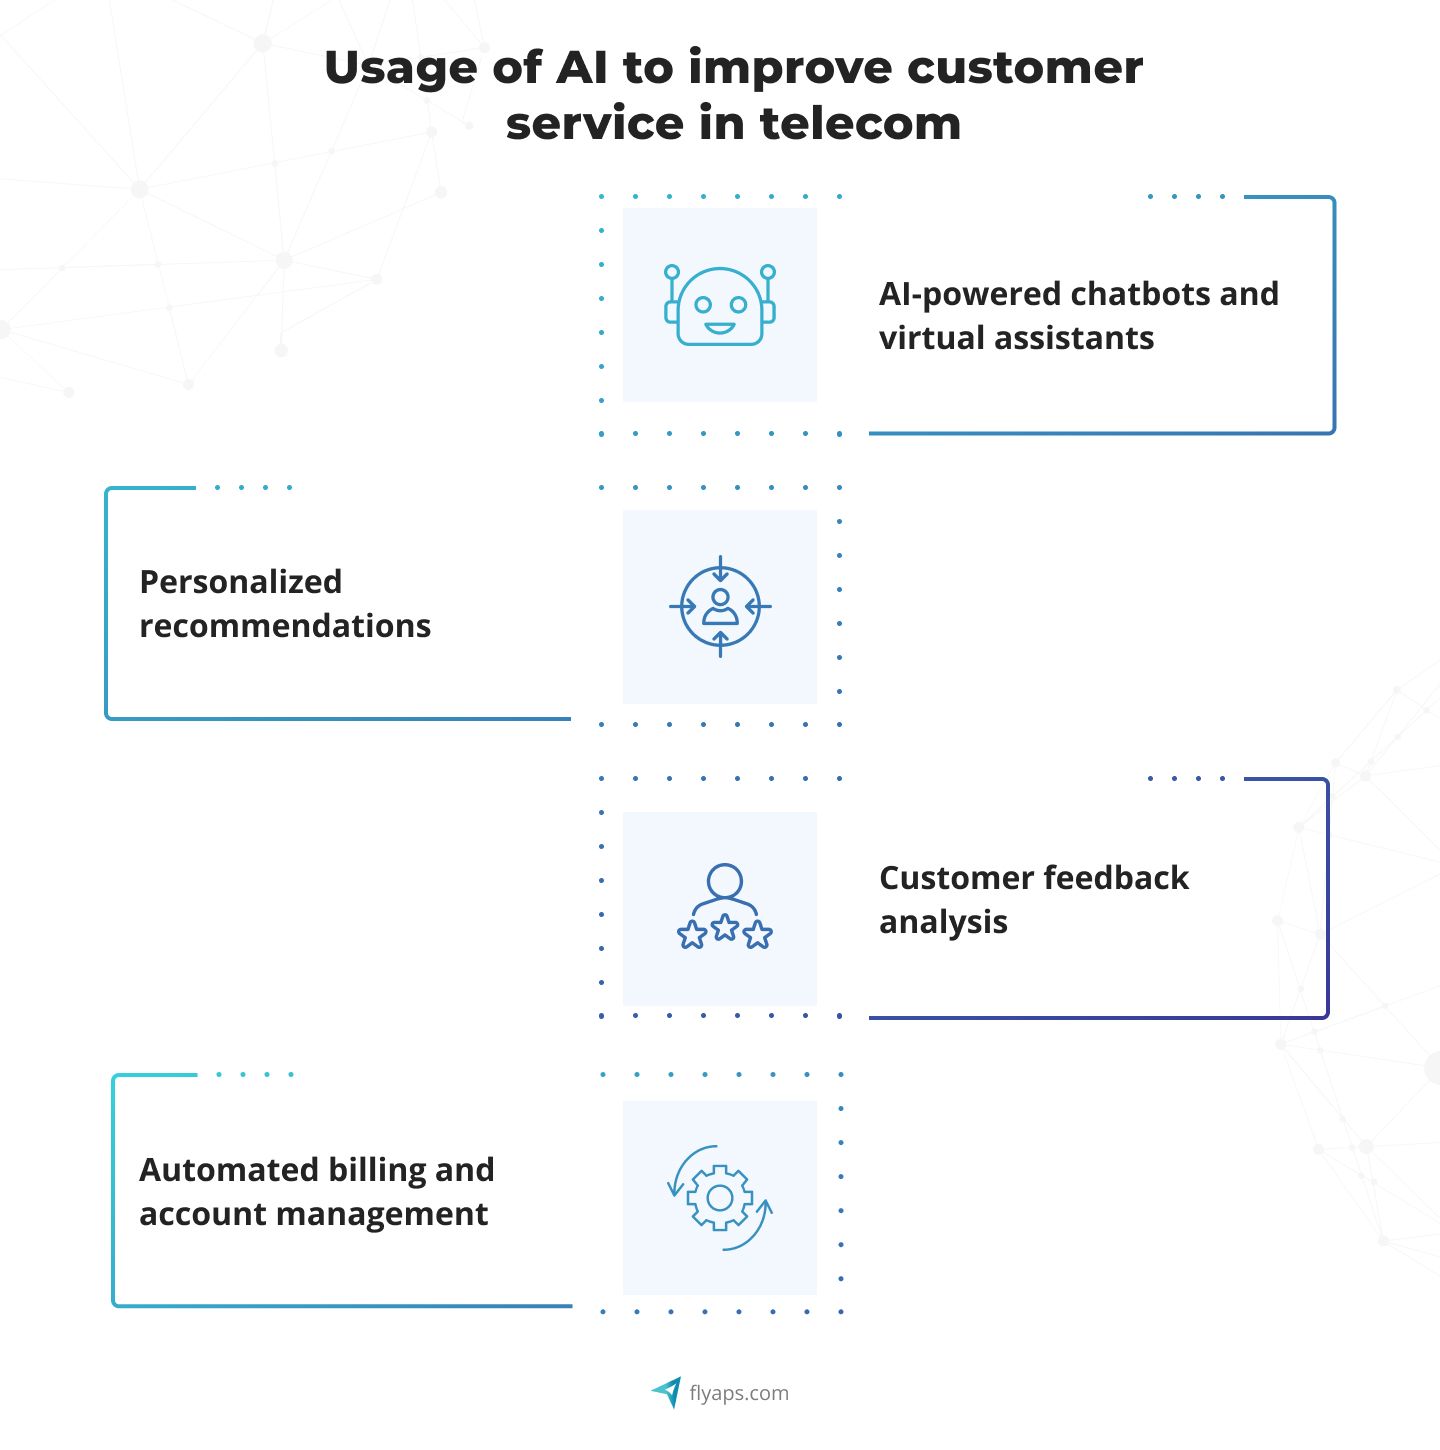 Usage of AI to improve customer service in telecom